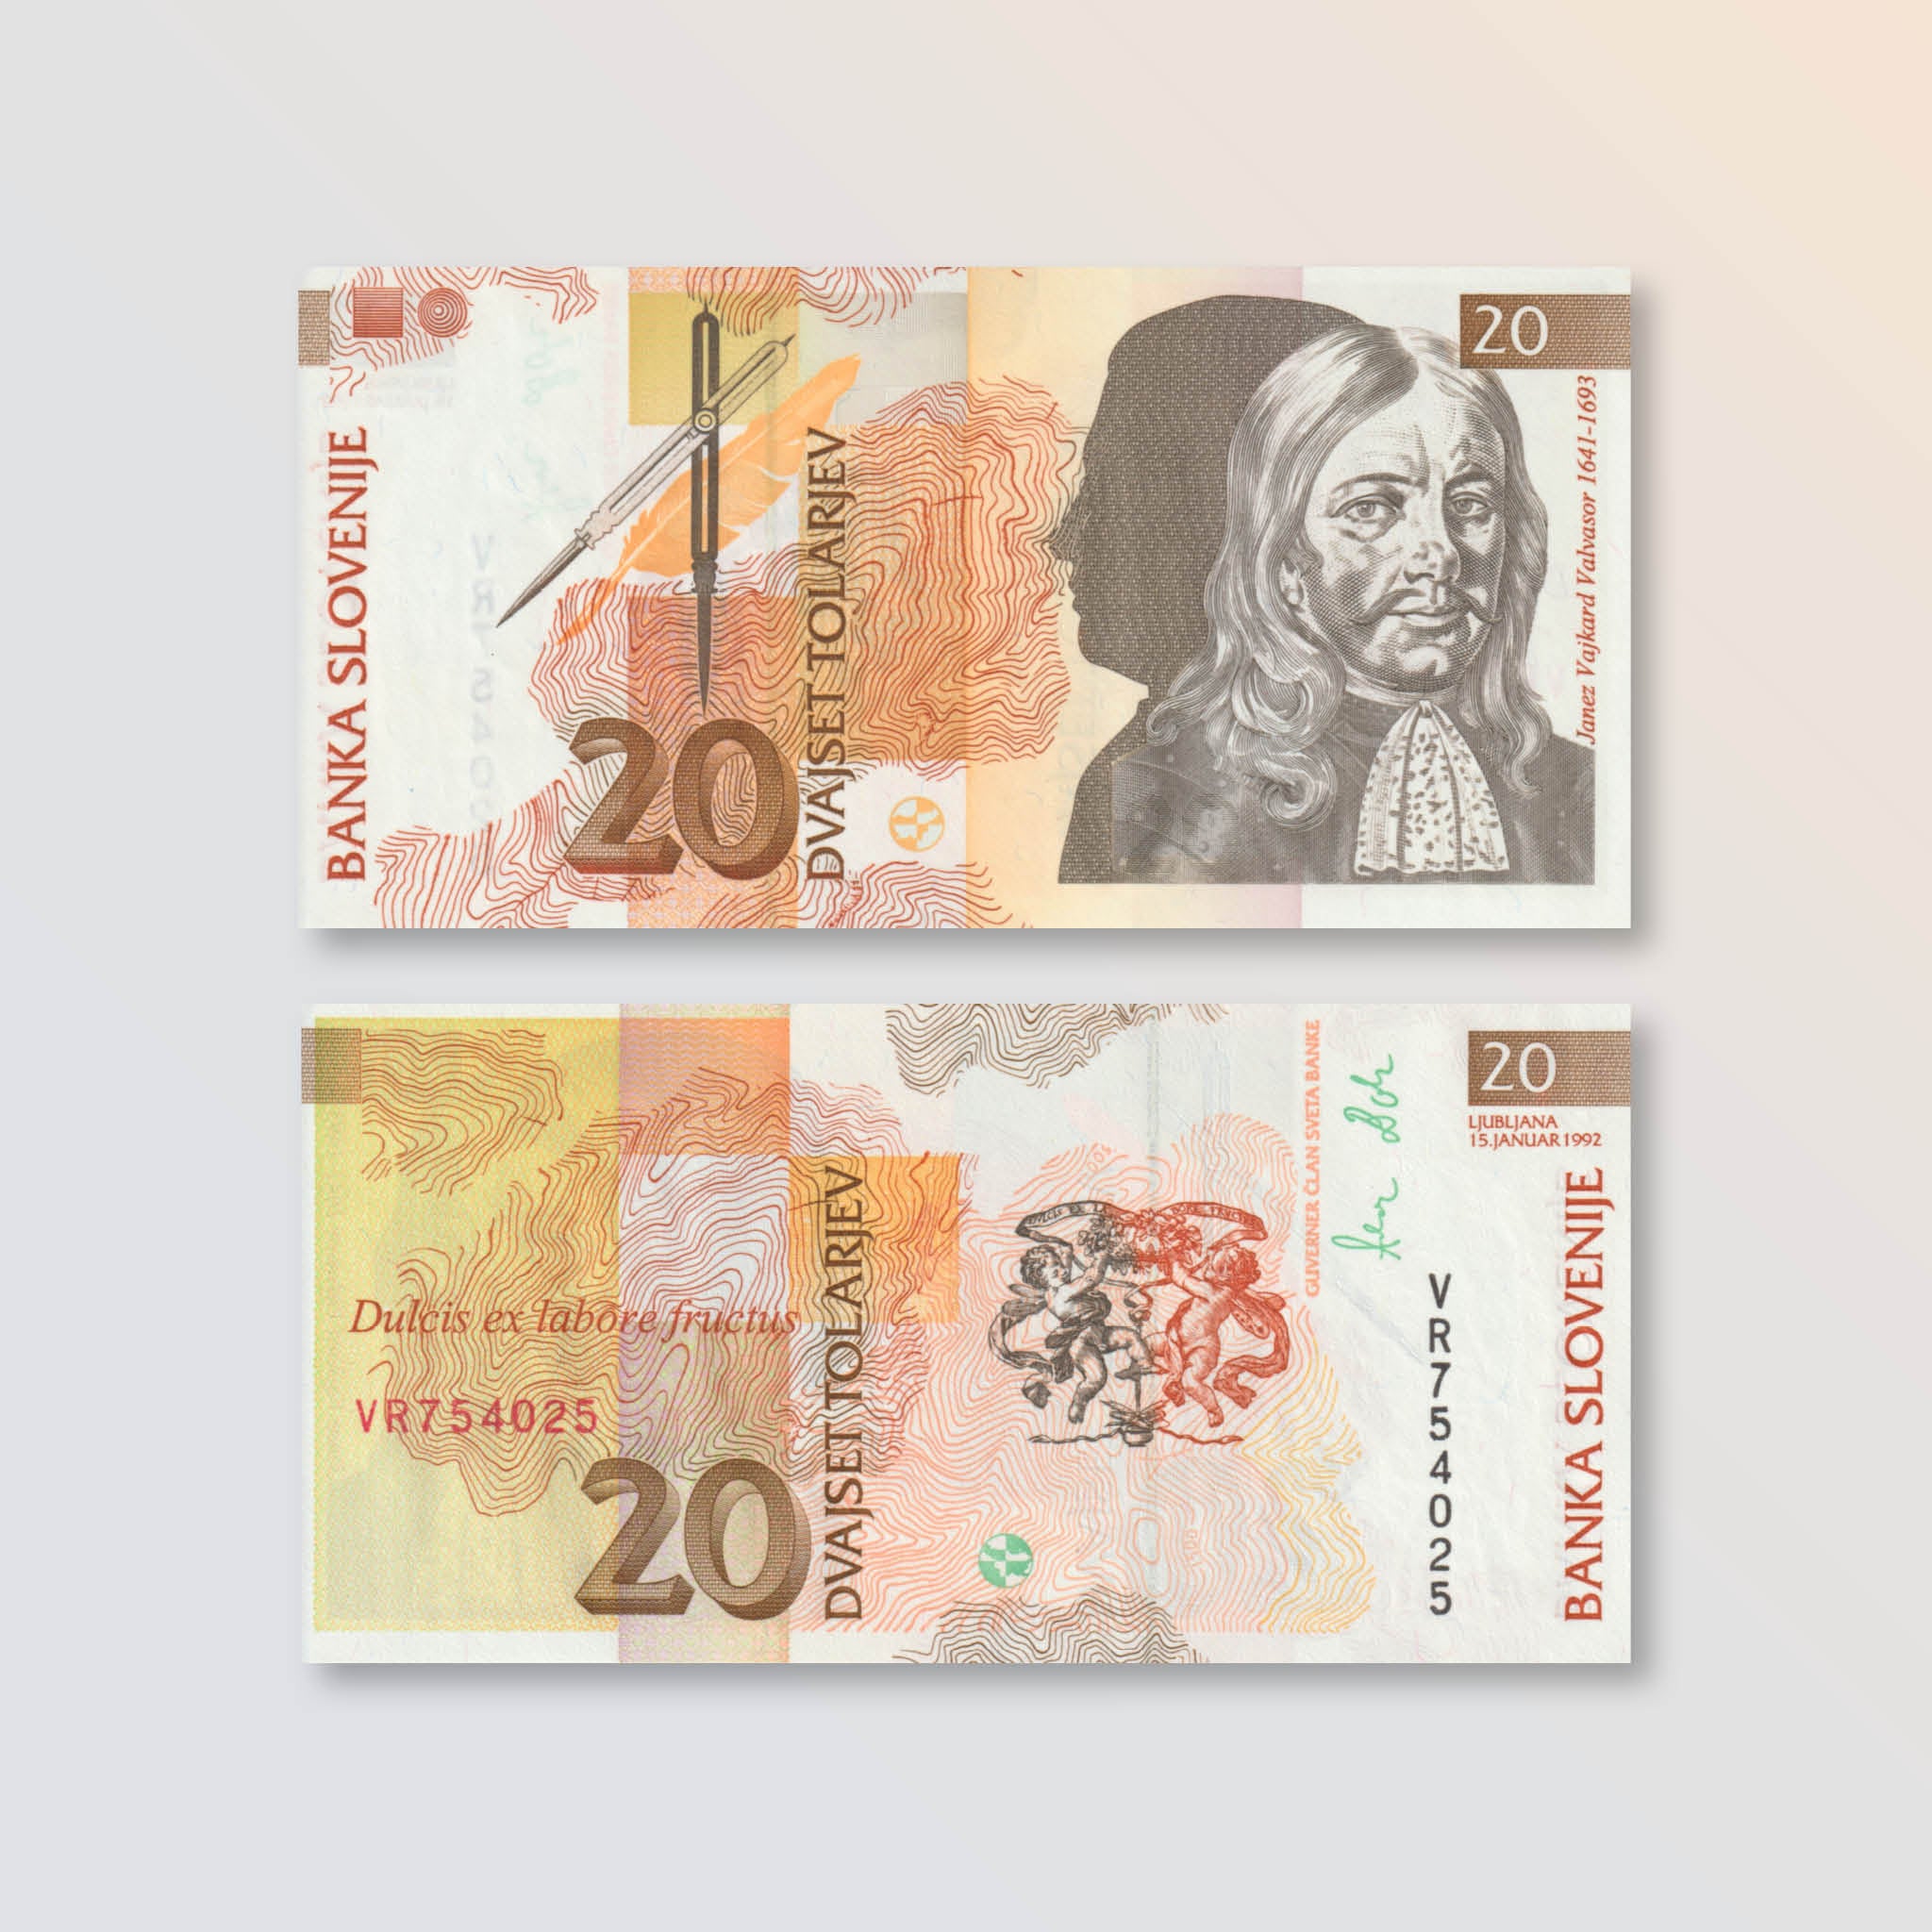 Slovenia 20 Tolarjev, 1992, B302a, P12a, UNC - Robert's World Money - World Banknotes